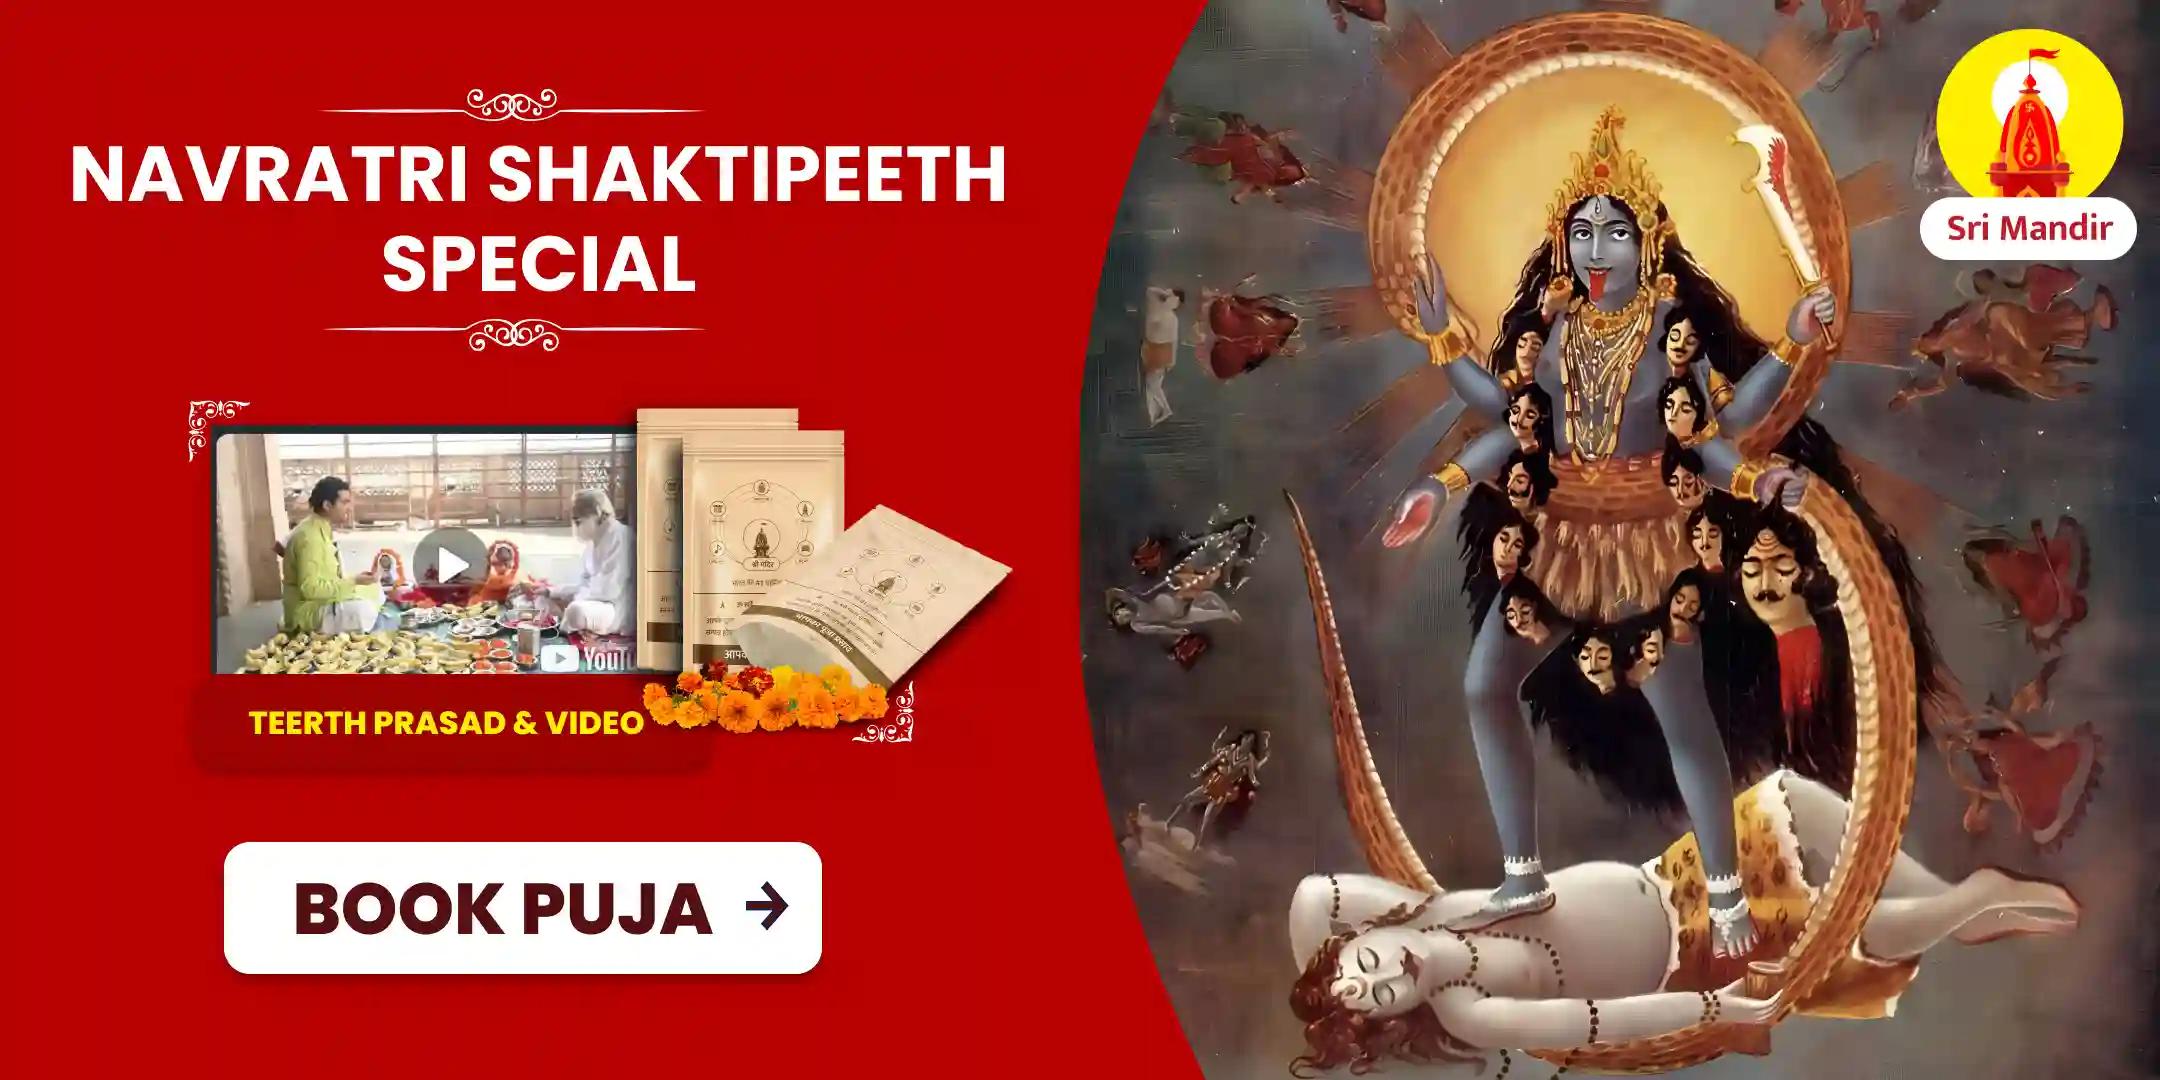 Navratri Shaktipeeth Special Divya MahaKali Tantra Yukta Yagya for Protection From Evil Forces, Negative Energies, and Dark Entities